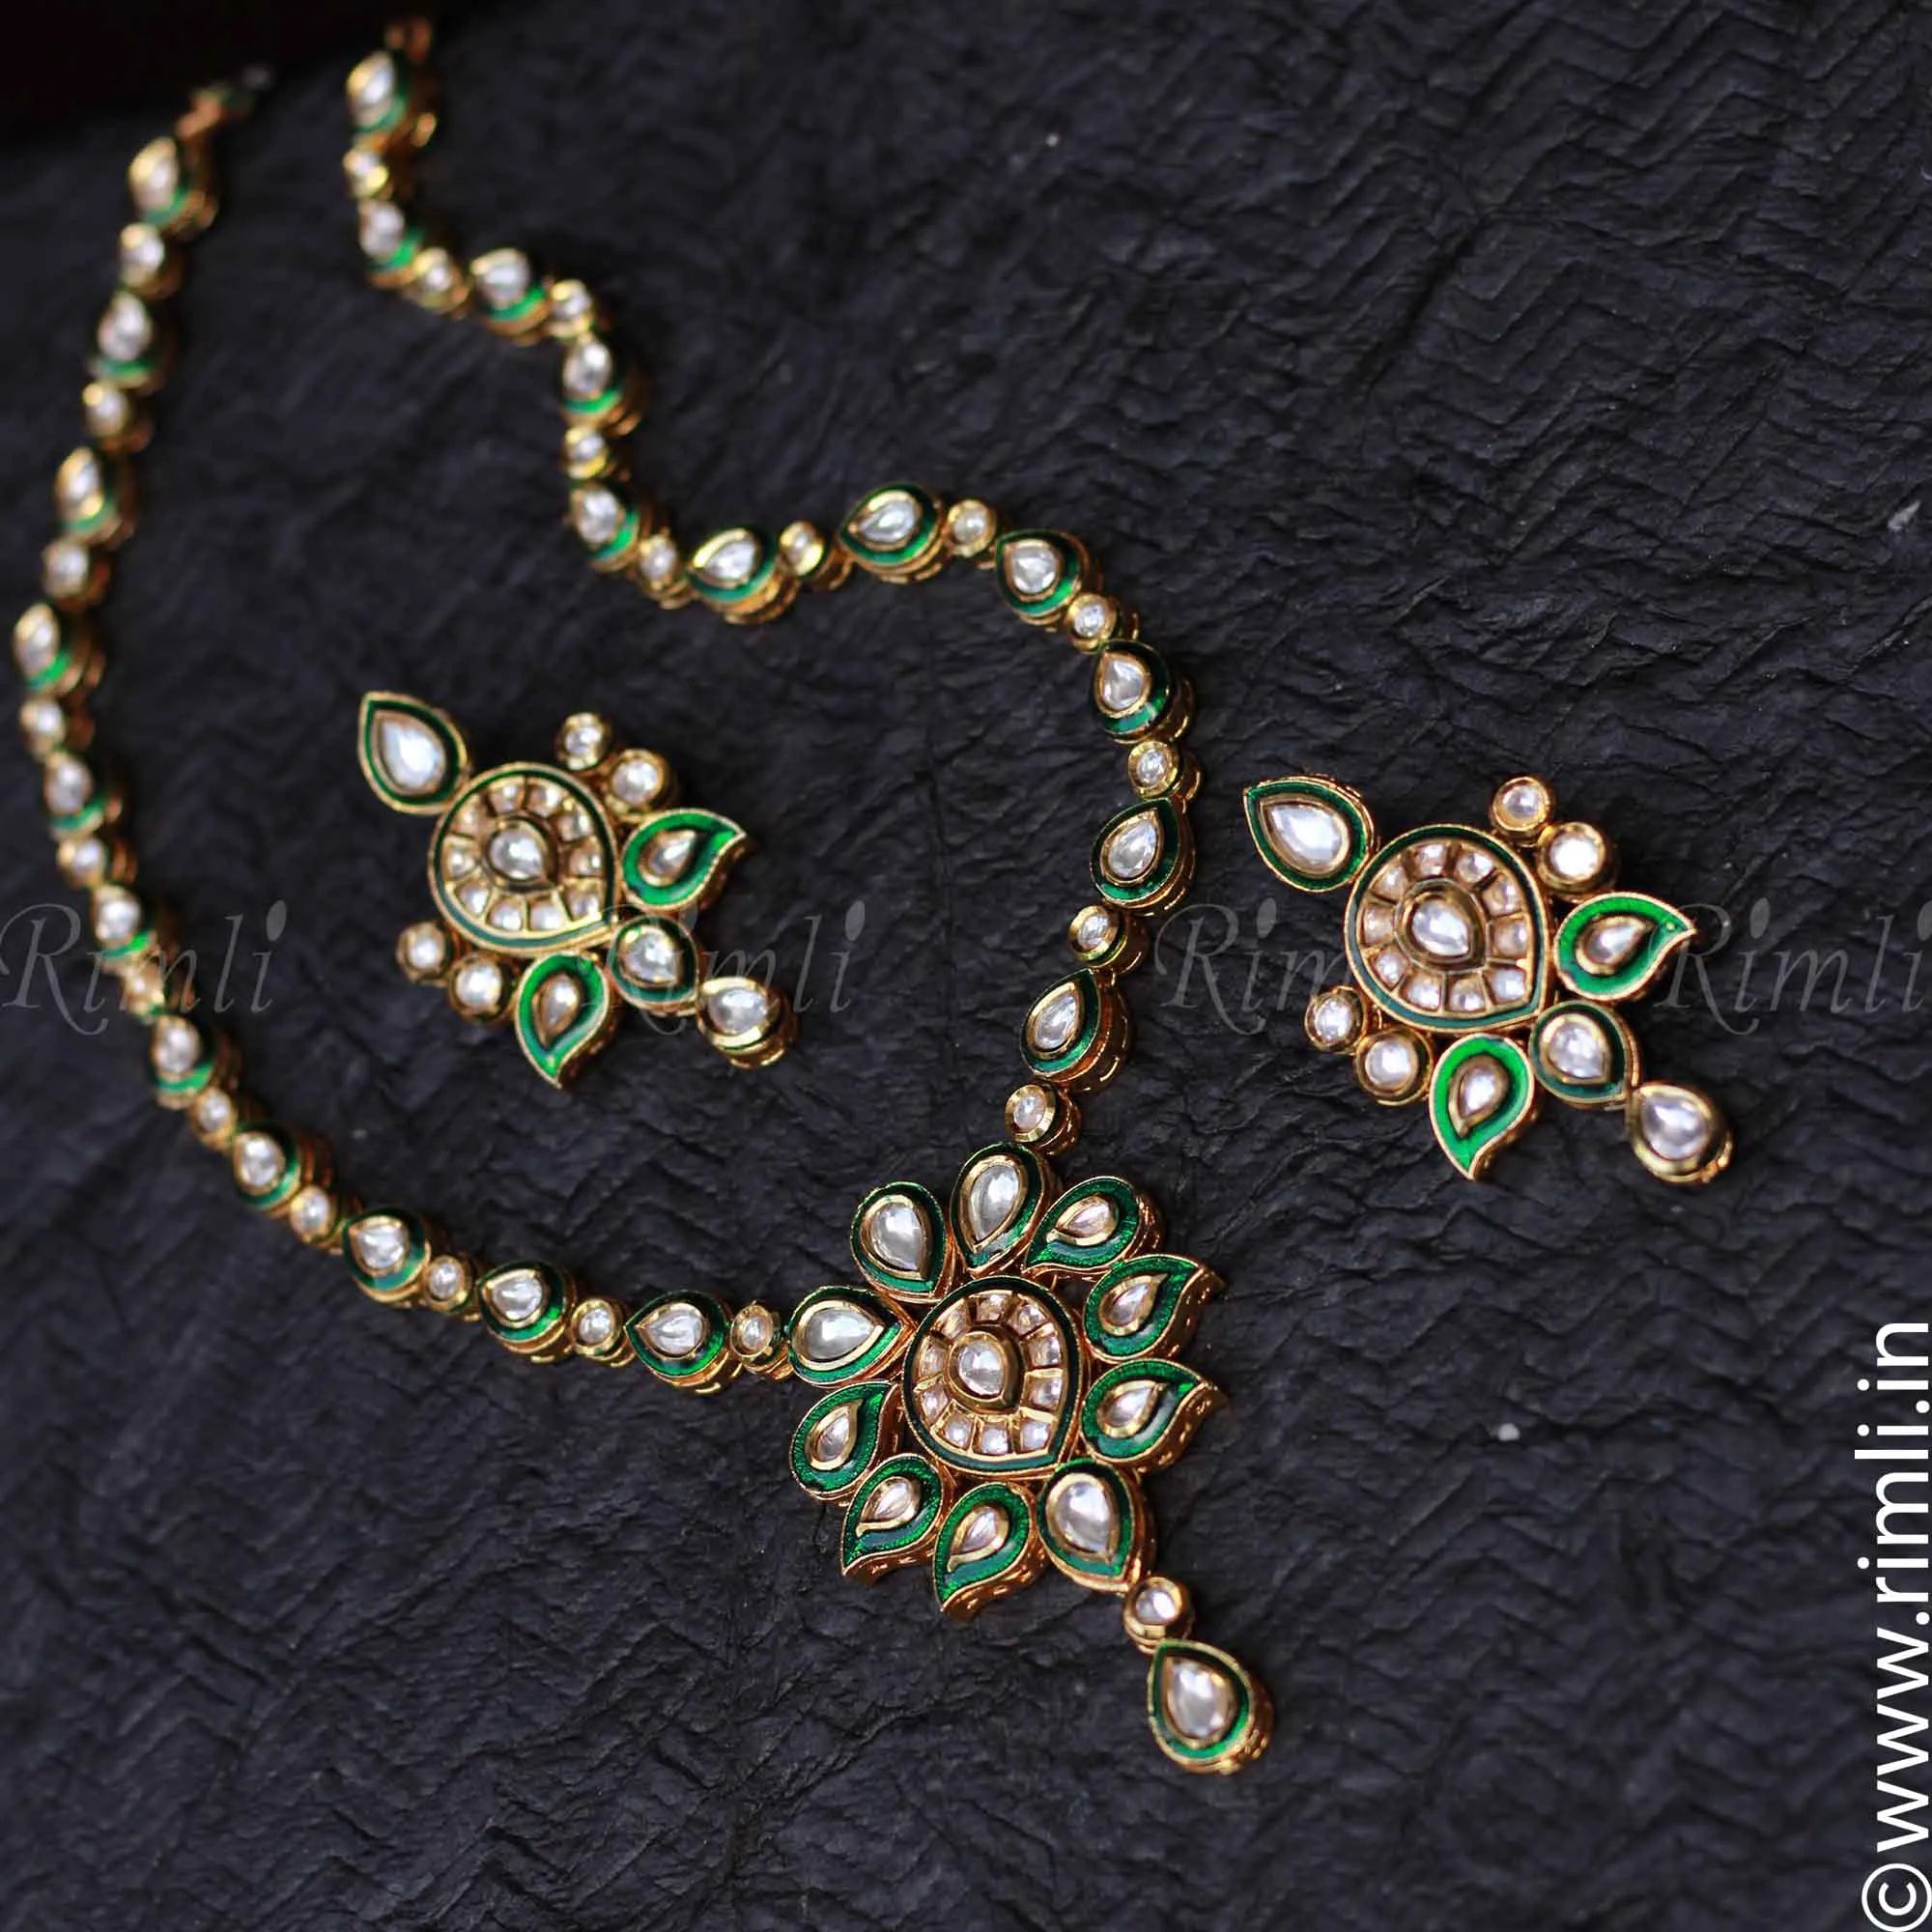 SALE Vintage Modernist Designer Necklace by Dominique Denaive Gold Resin  Stones | eBay